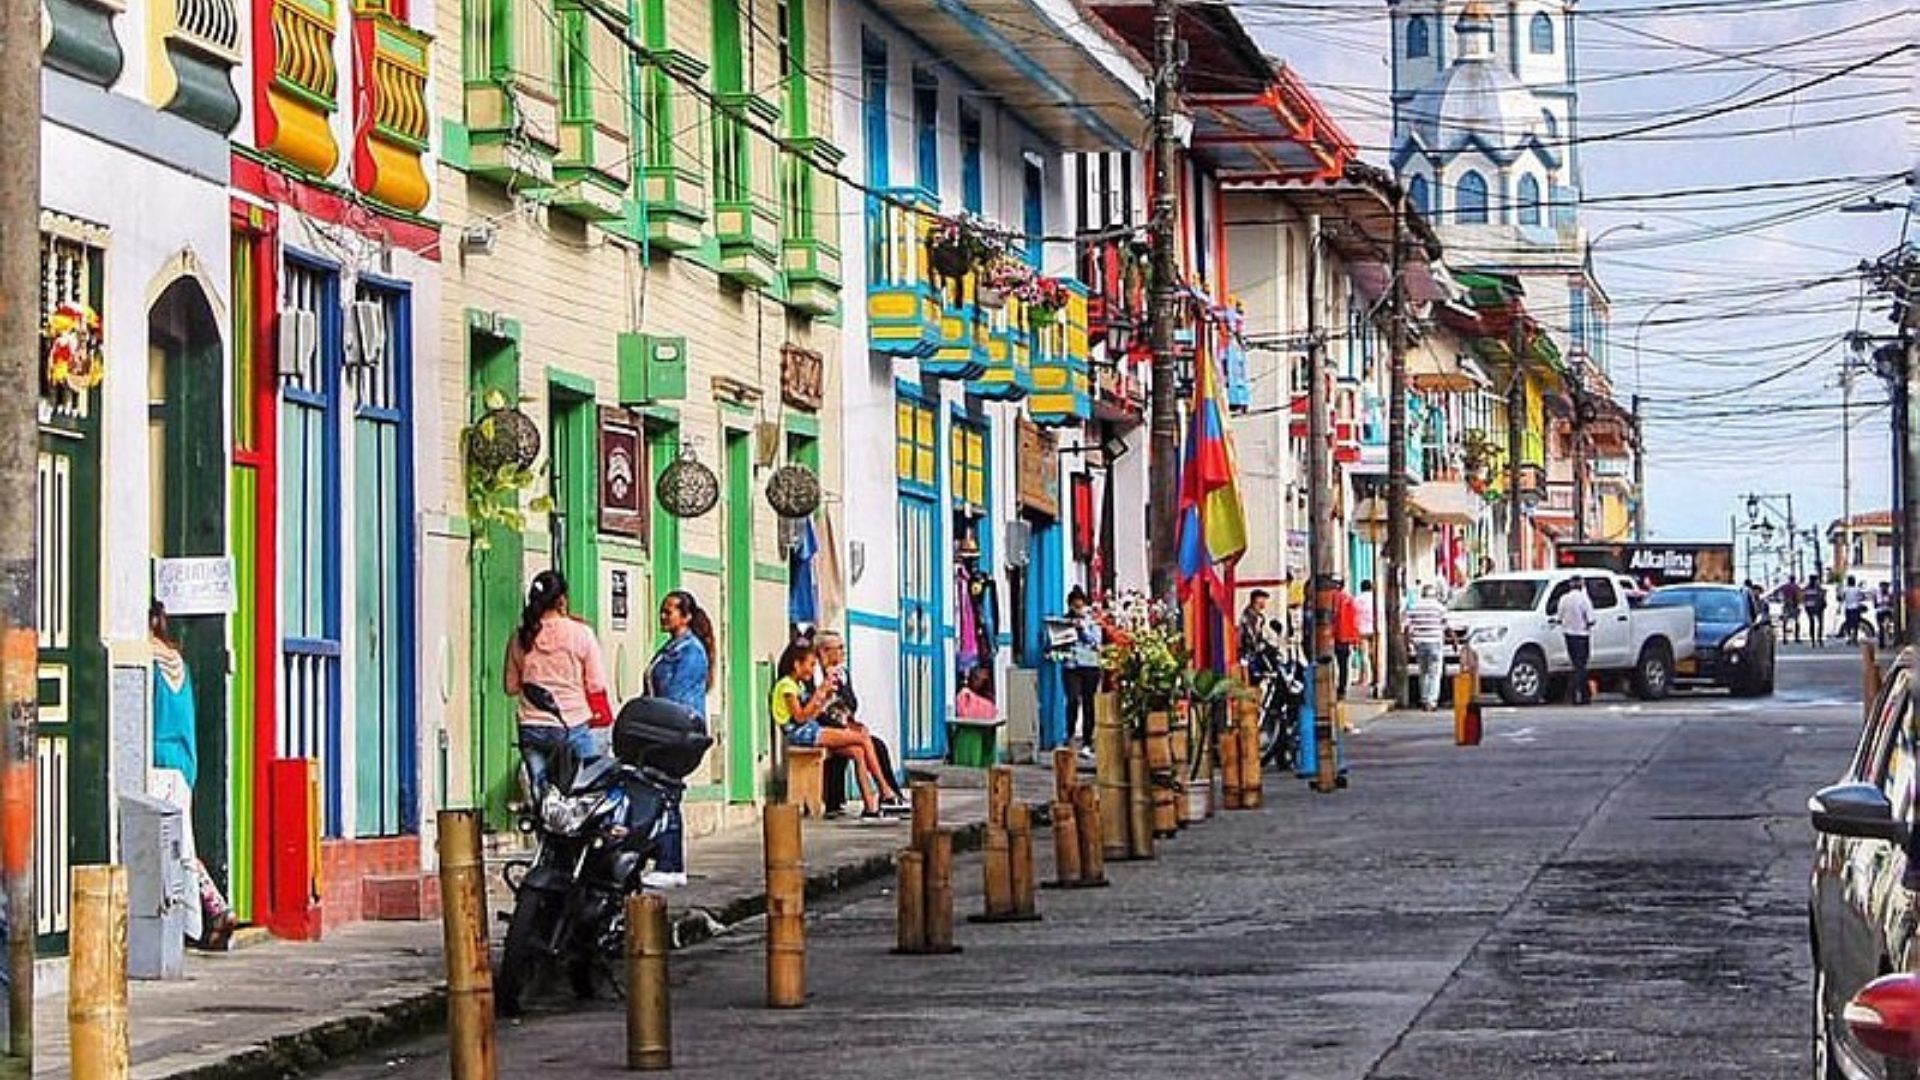 Calles de Filandia, Quindío. Foto: Wikimedia Commons/Hdhdhdybooty